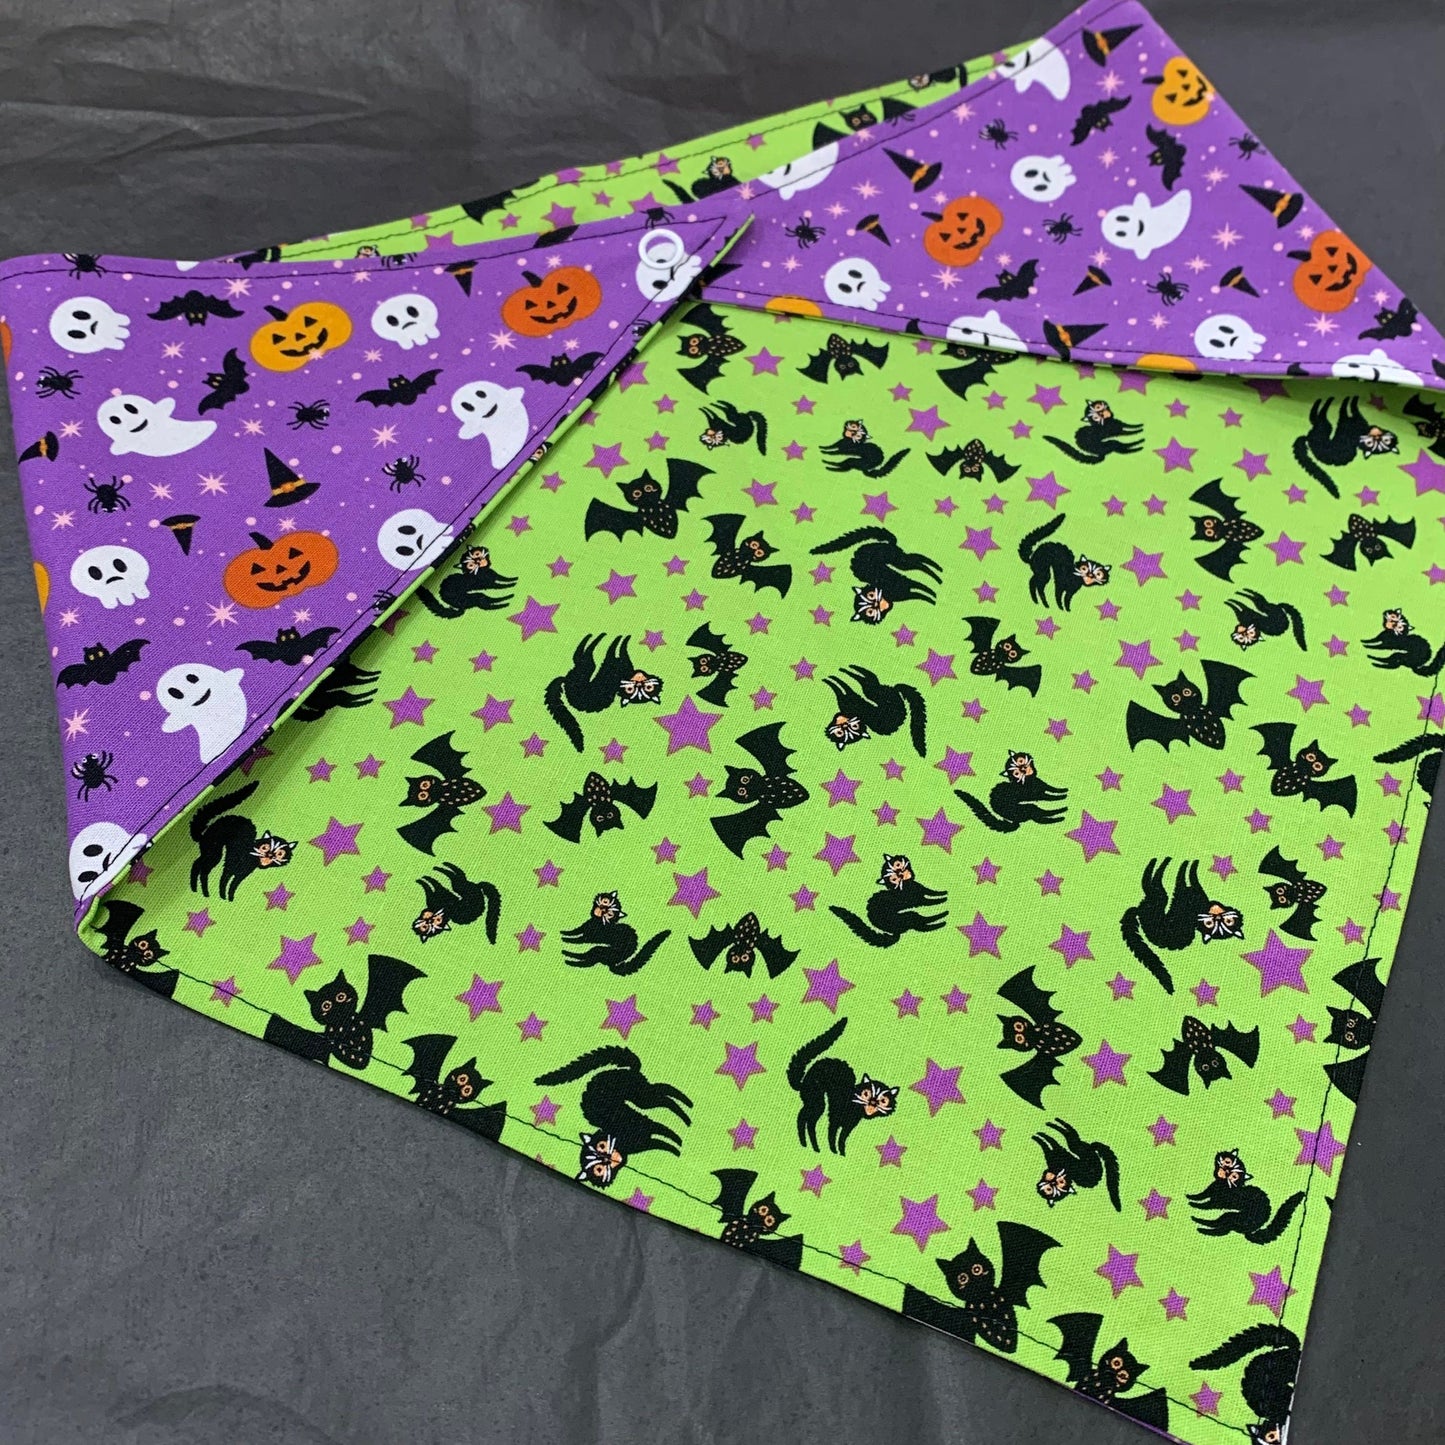 MAKIN' WHOOPEE - Extra Large Halloween Pet Bandana- Spooky Cute/Cats & Bats